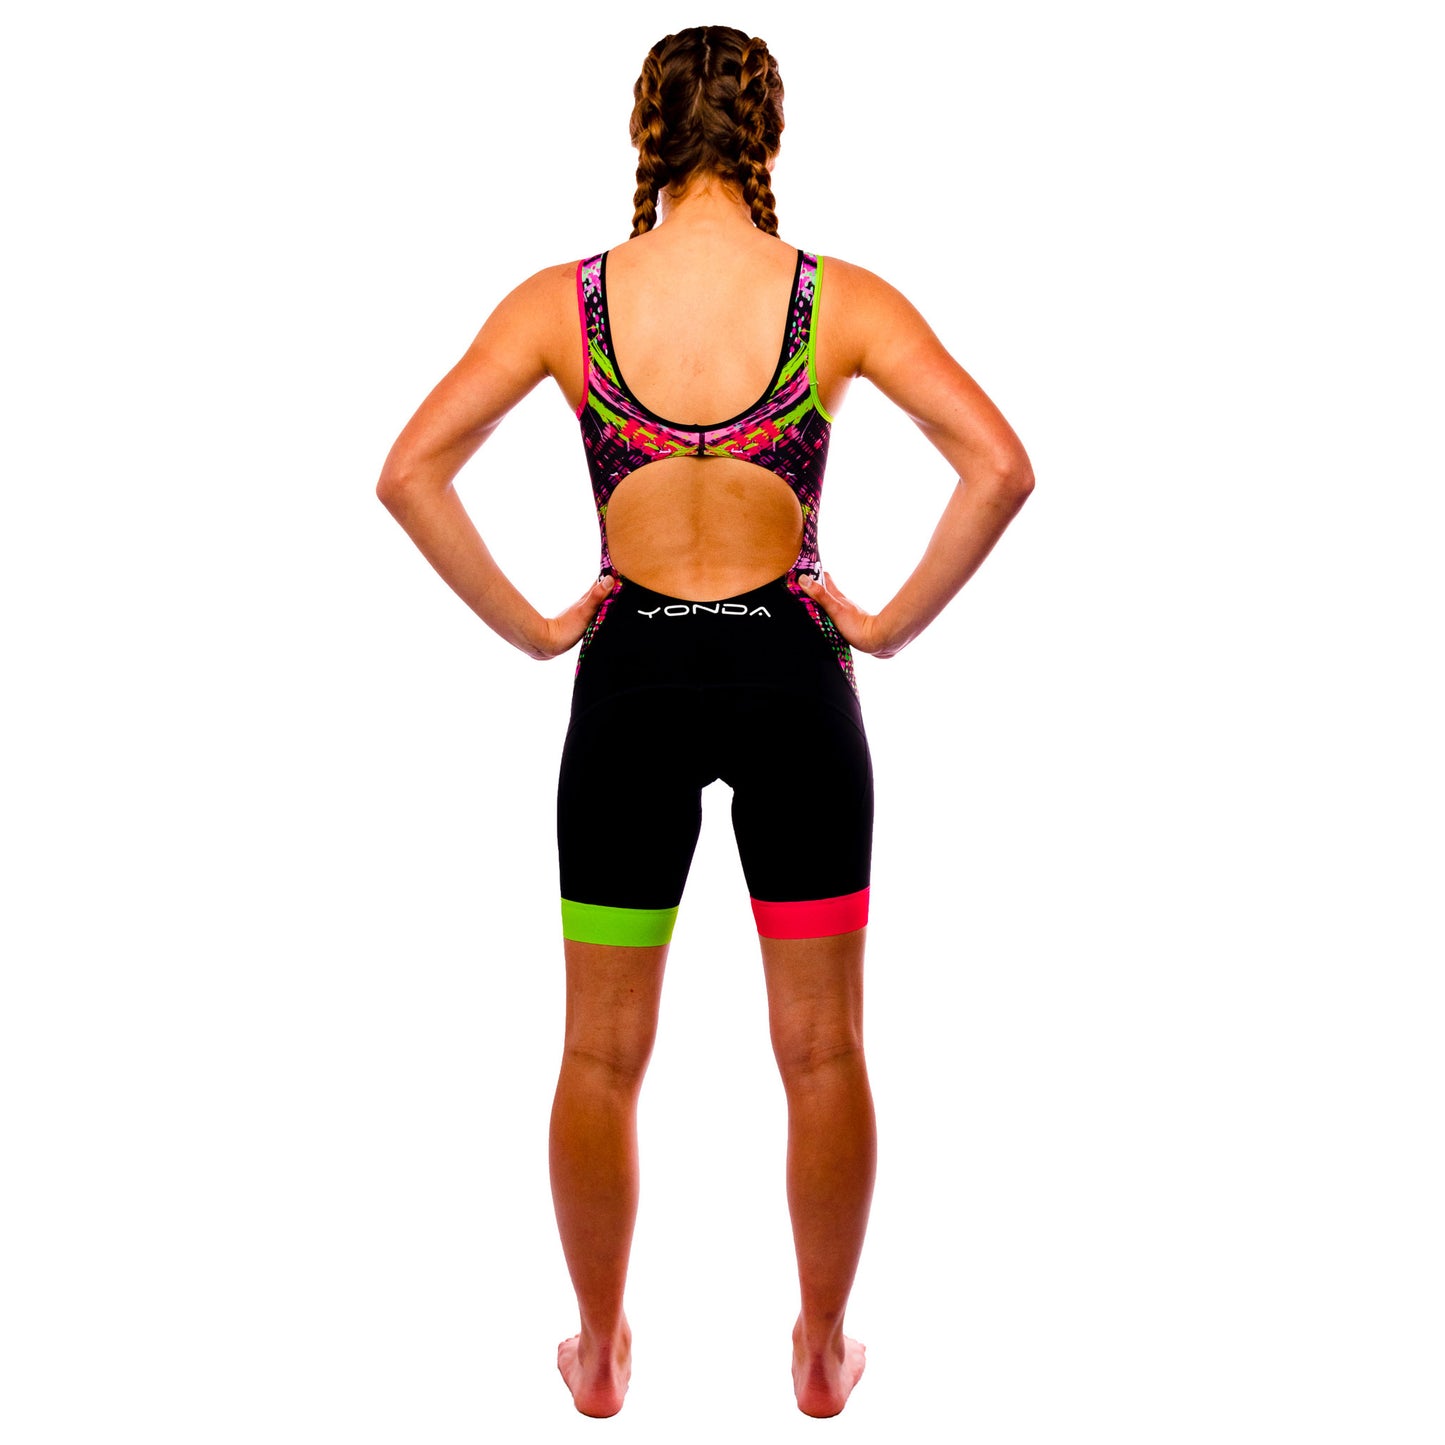 Velocita Performance Triathlon suit Womens Racer back - back